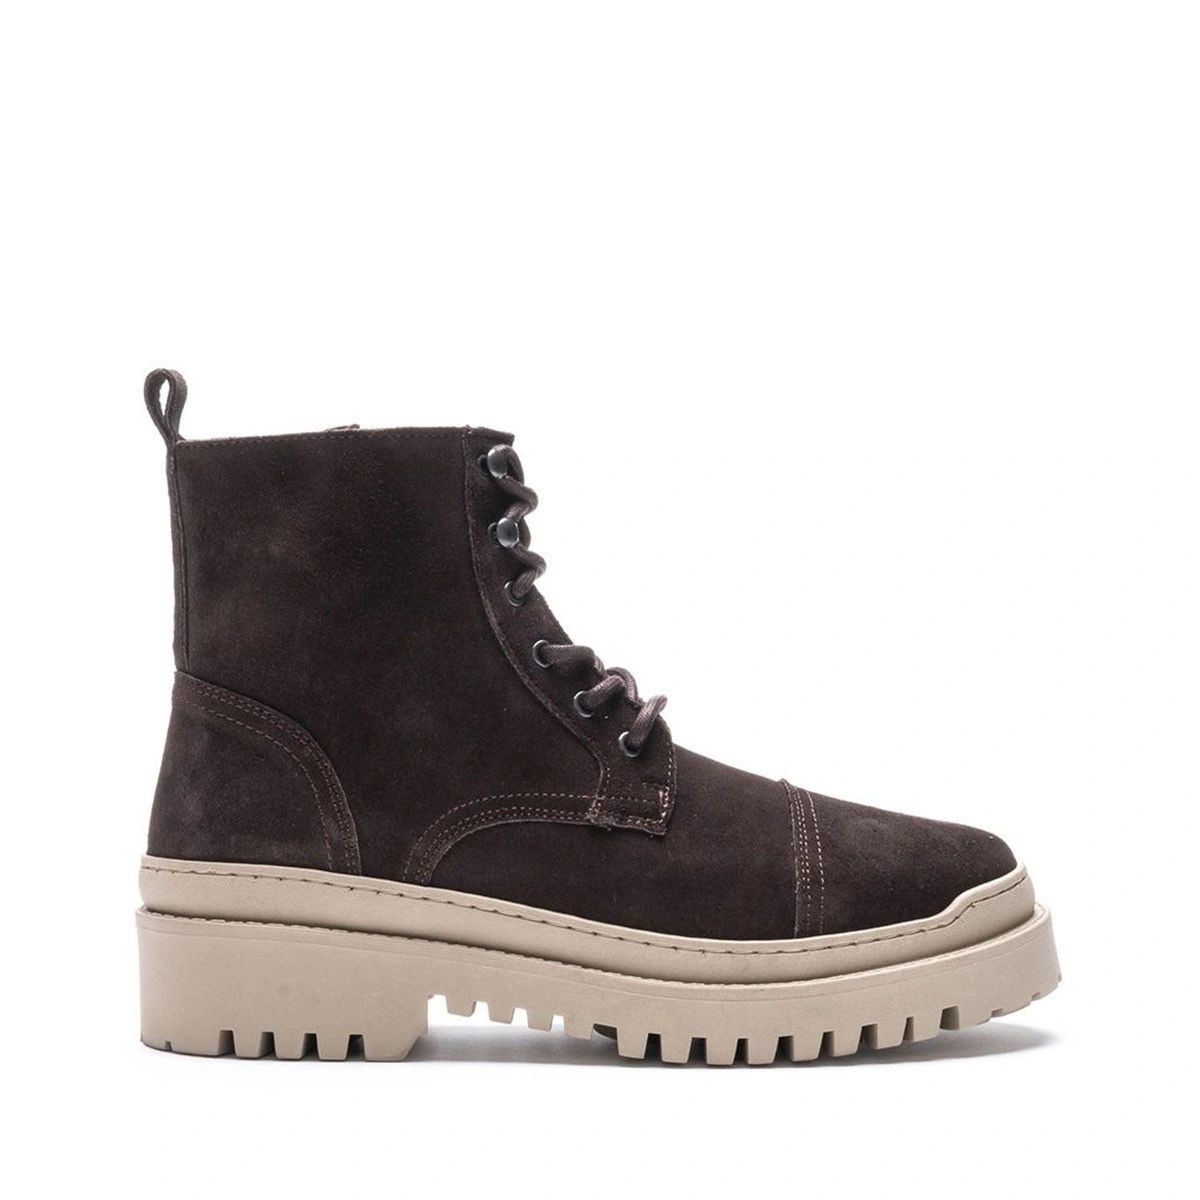 Men's suede leather ankle boots - PERLA MODA - Antoniadis Stores